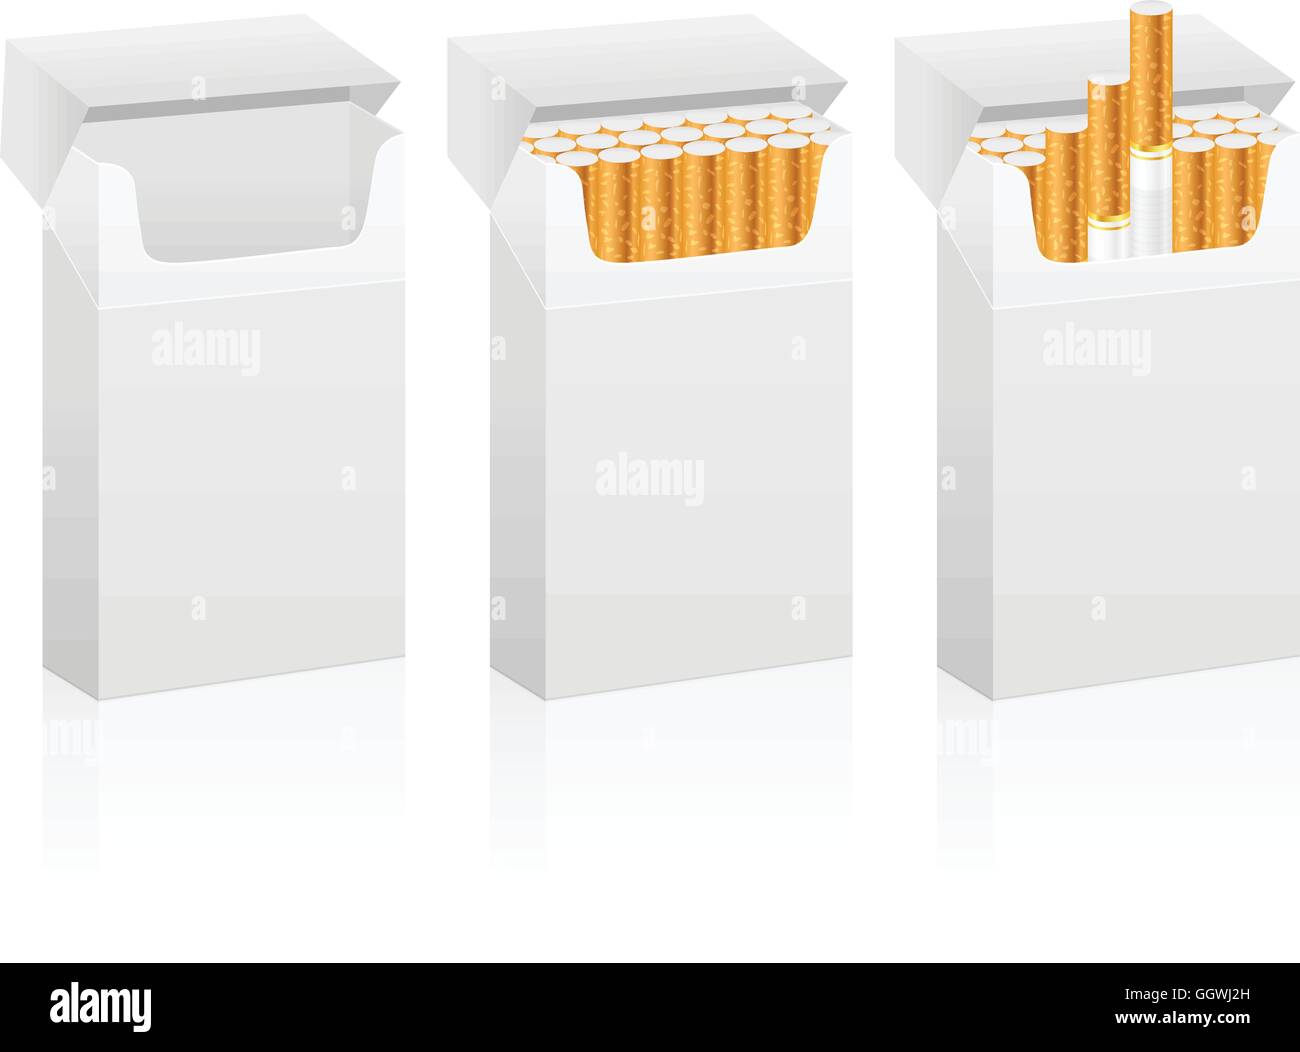 Cigarette box set on a white background. Stock Vector